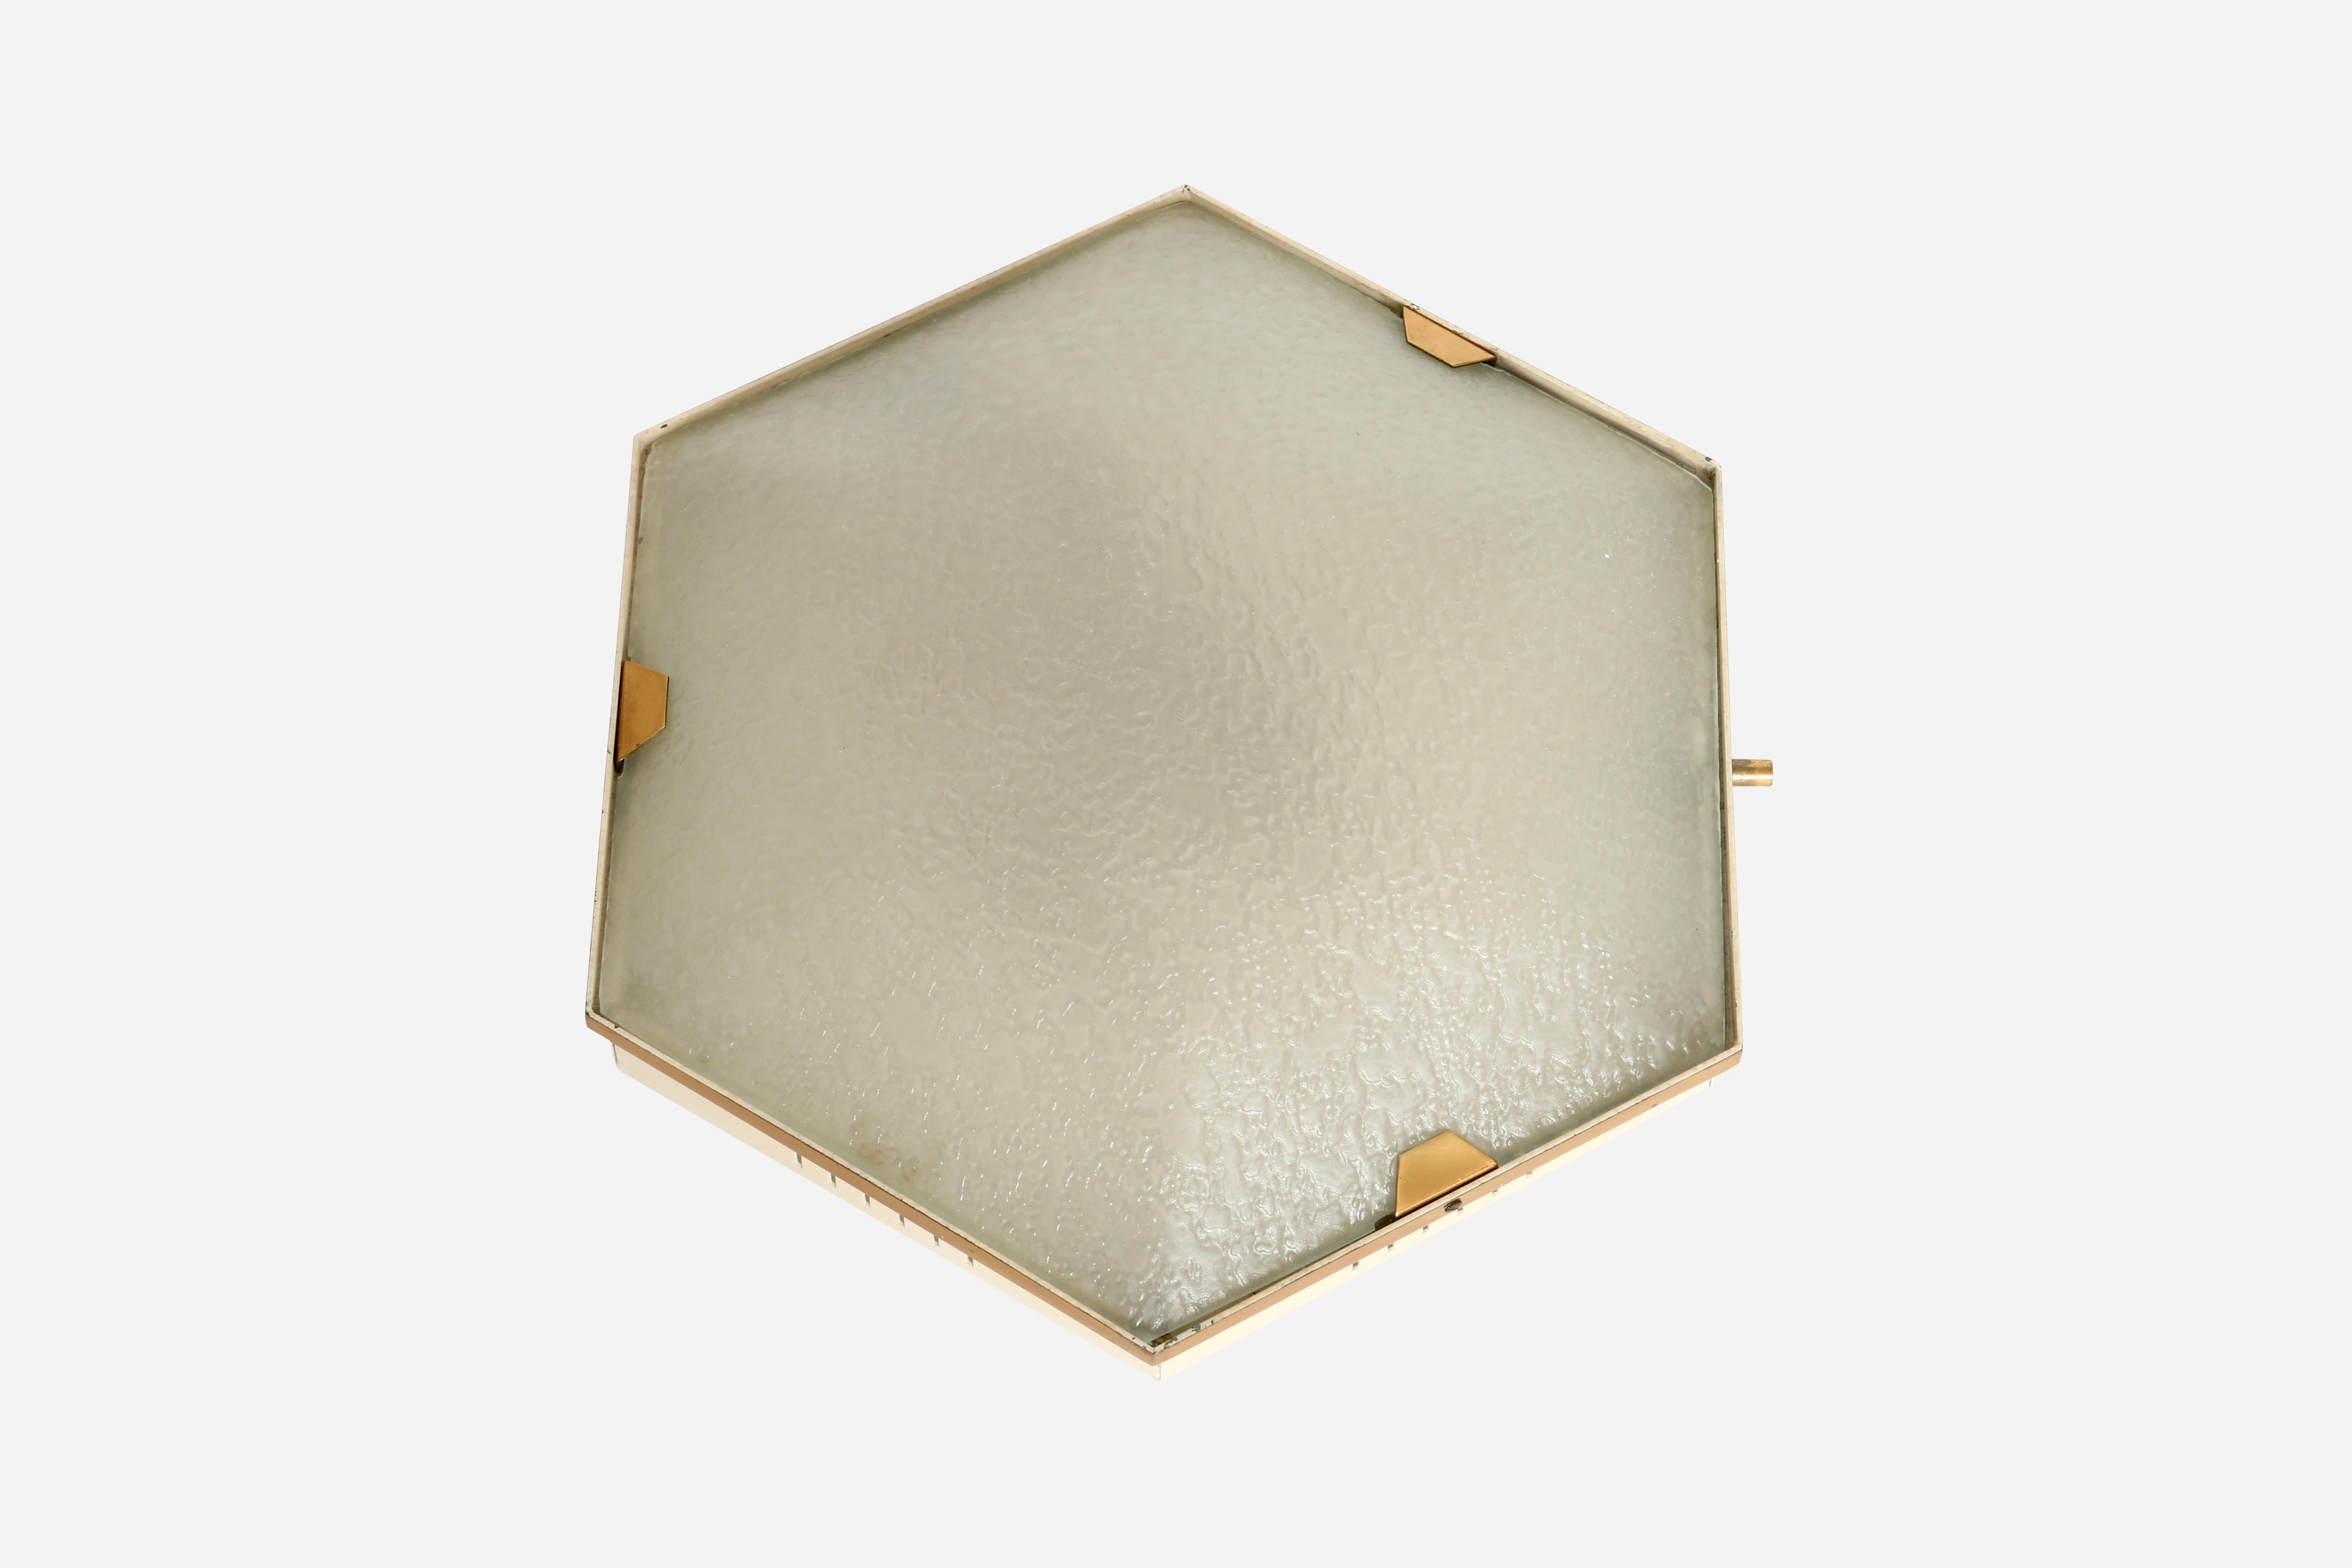 Stilnovo flush mount ceiling light model 1183.
Made in Italy in 1950s.
Textured glass, brass, enameled metal.
Stamped 